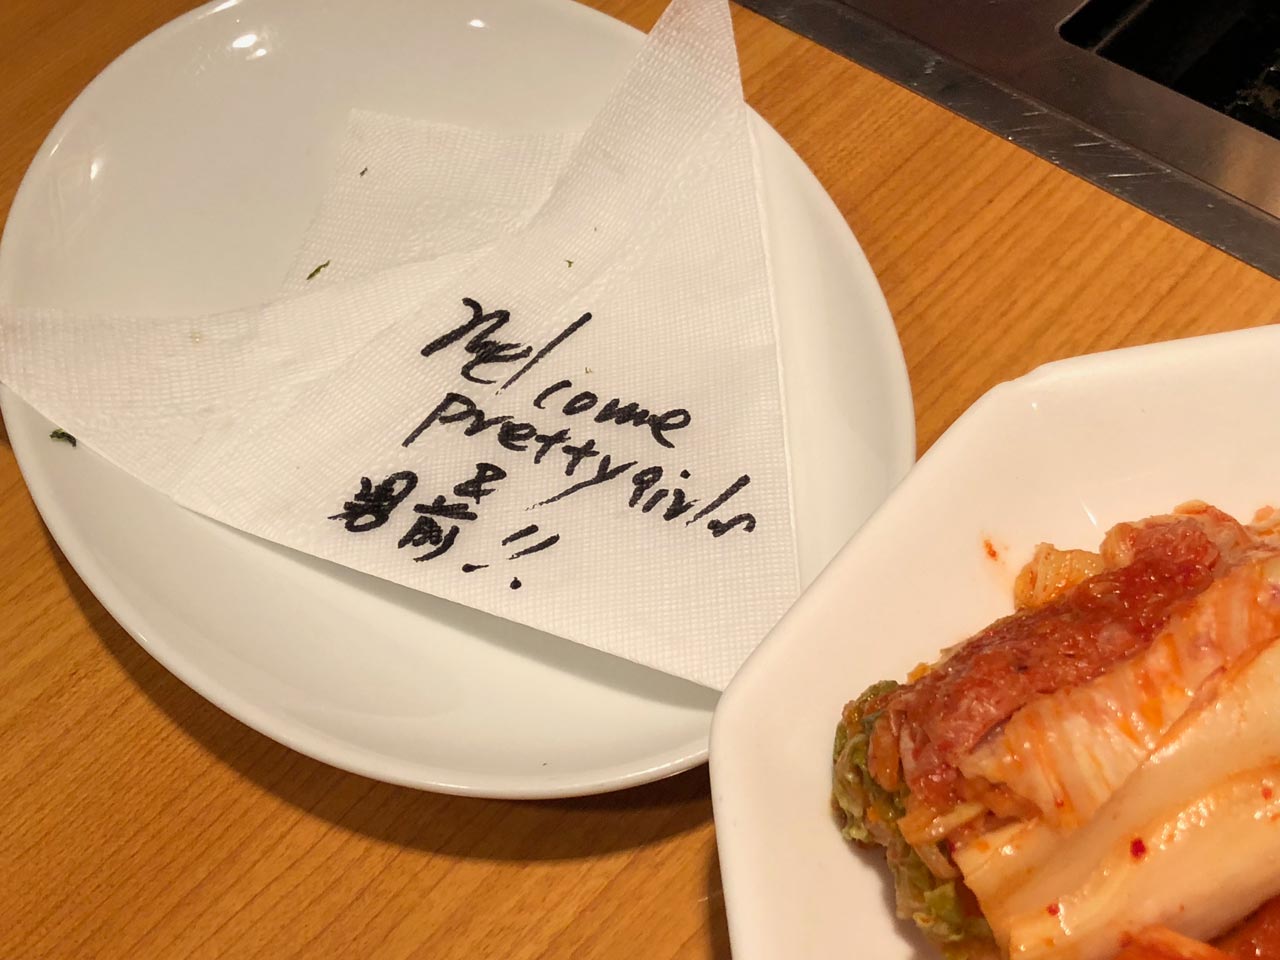 flattering message written on a napkin